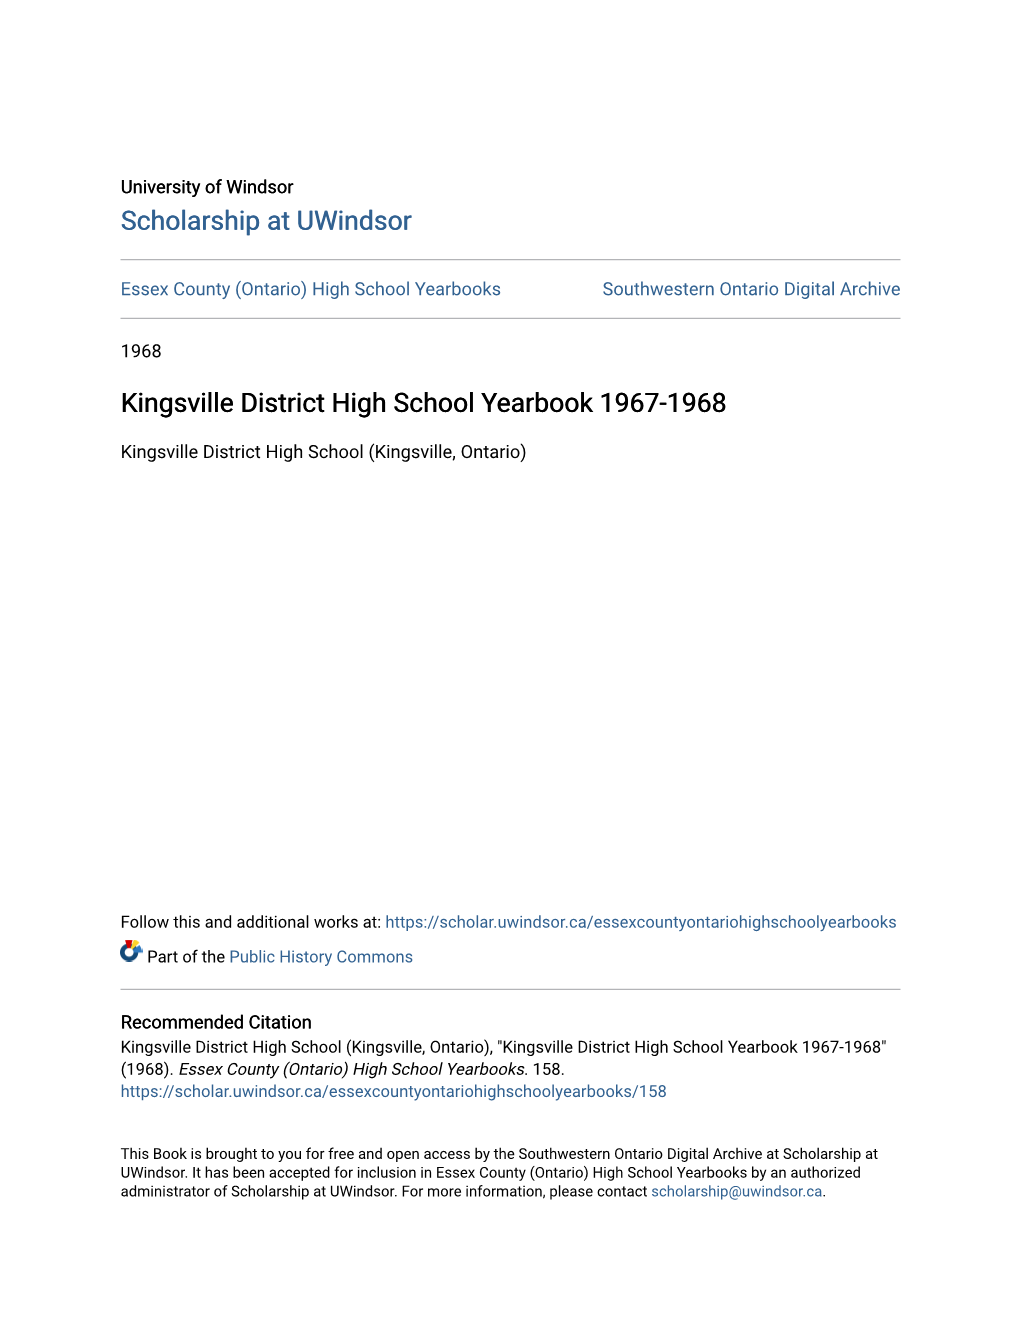 Kingsville District High School Yearbook 1967-1968